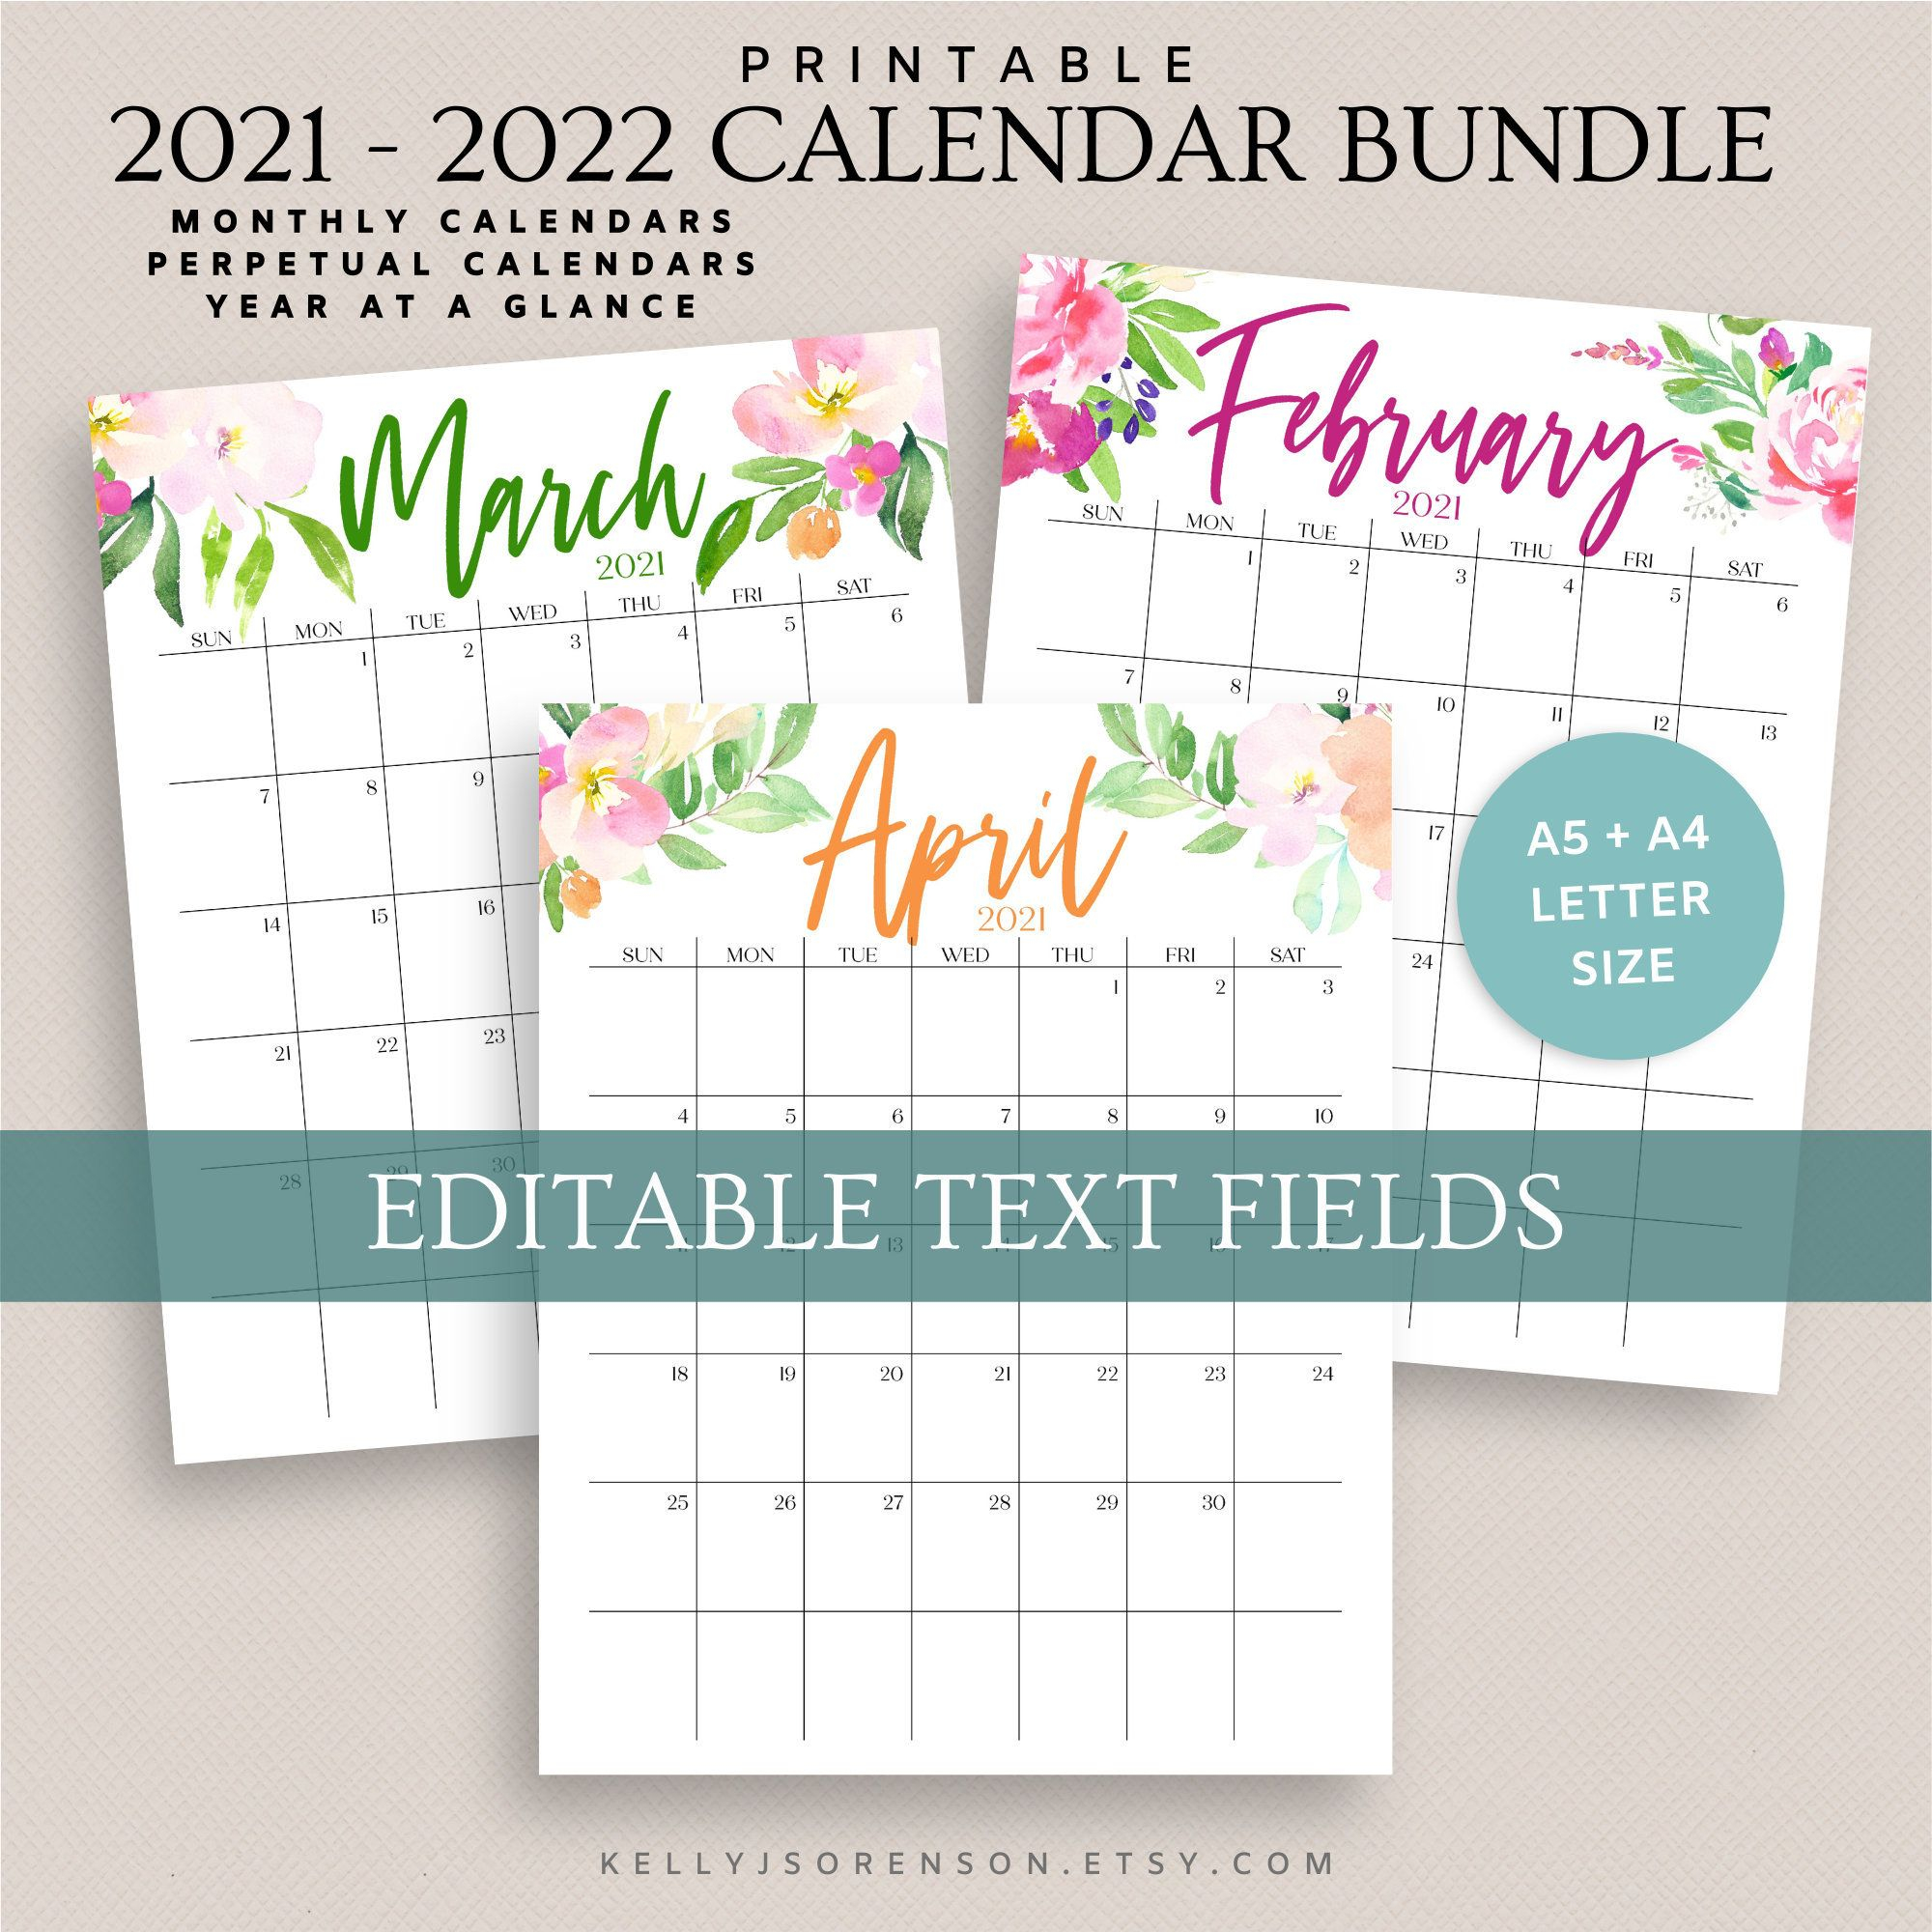 2021 2022 Printable Editable Calendar Bundle Includes